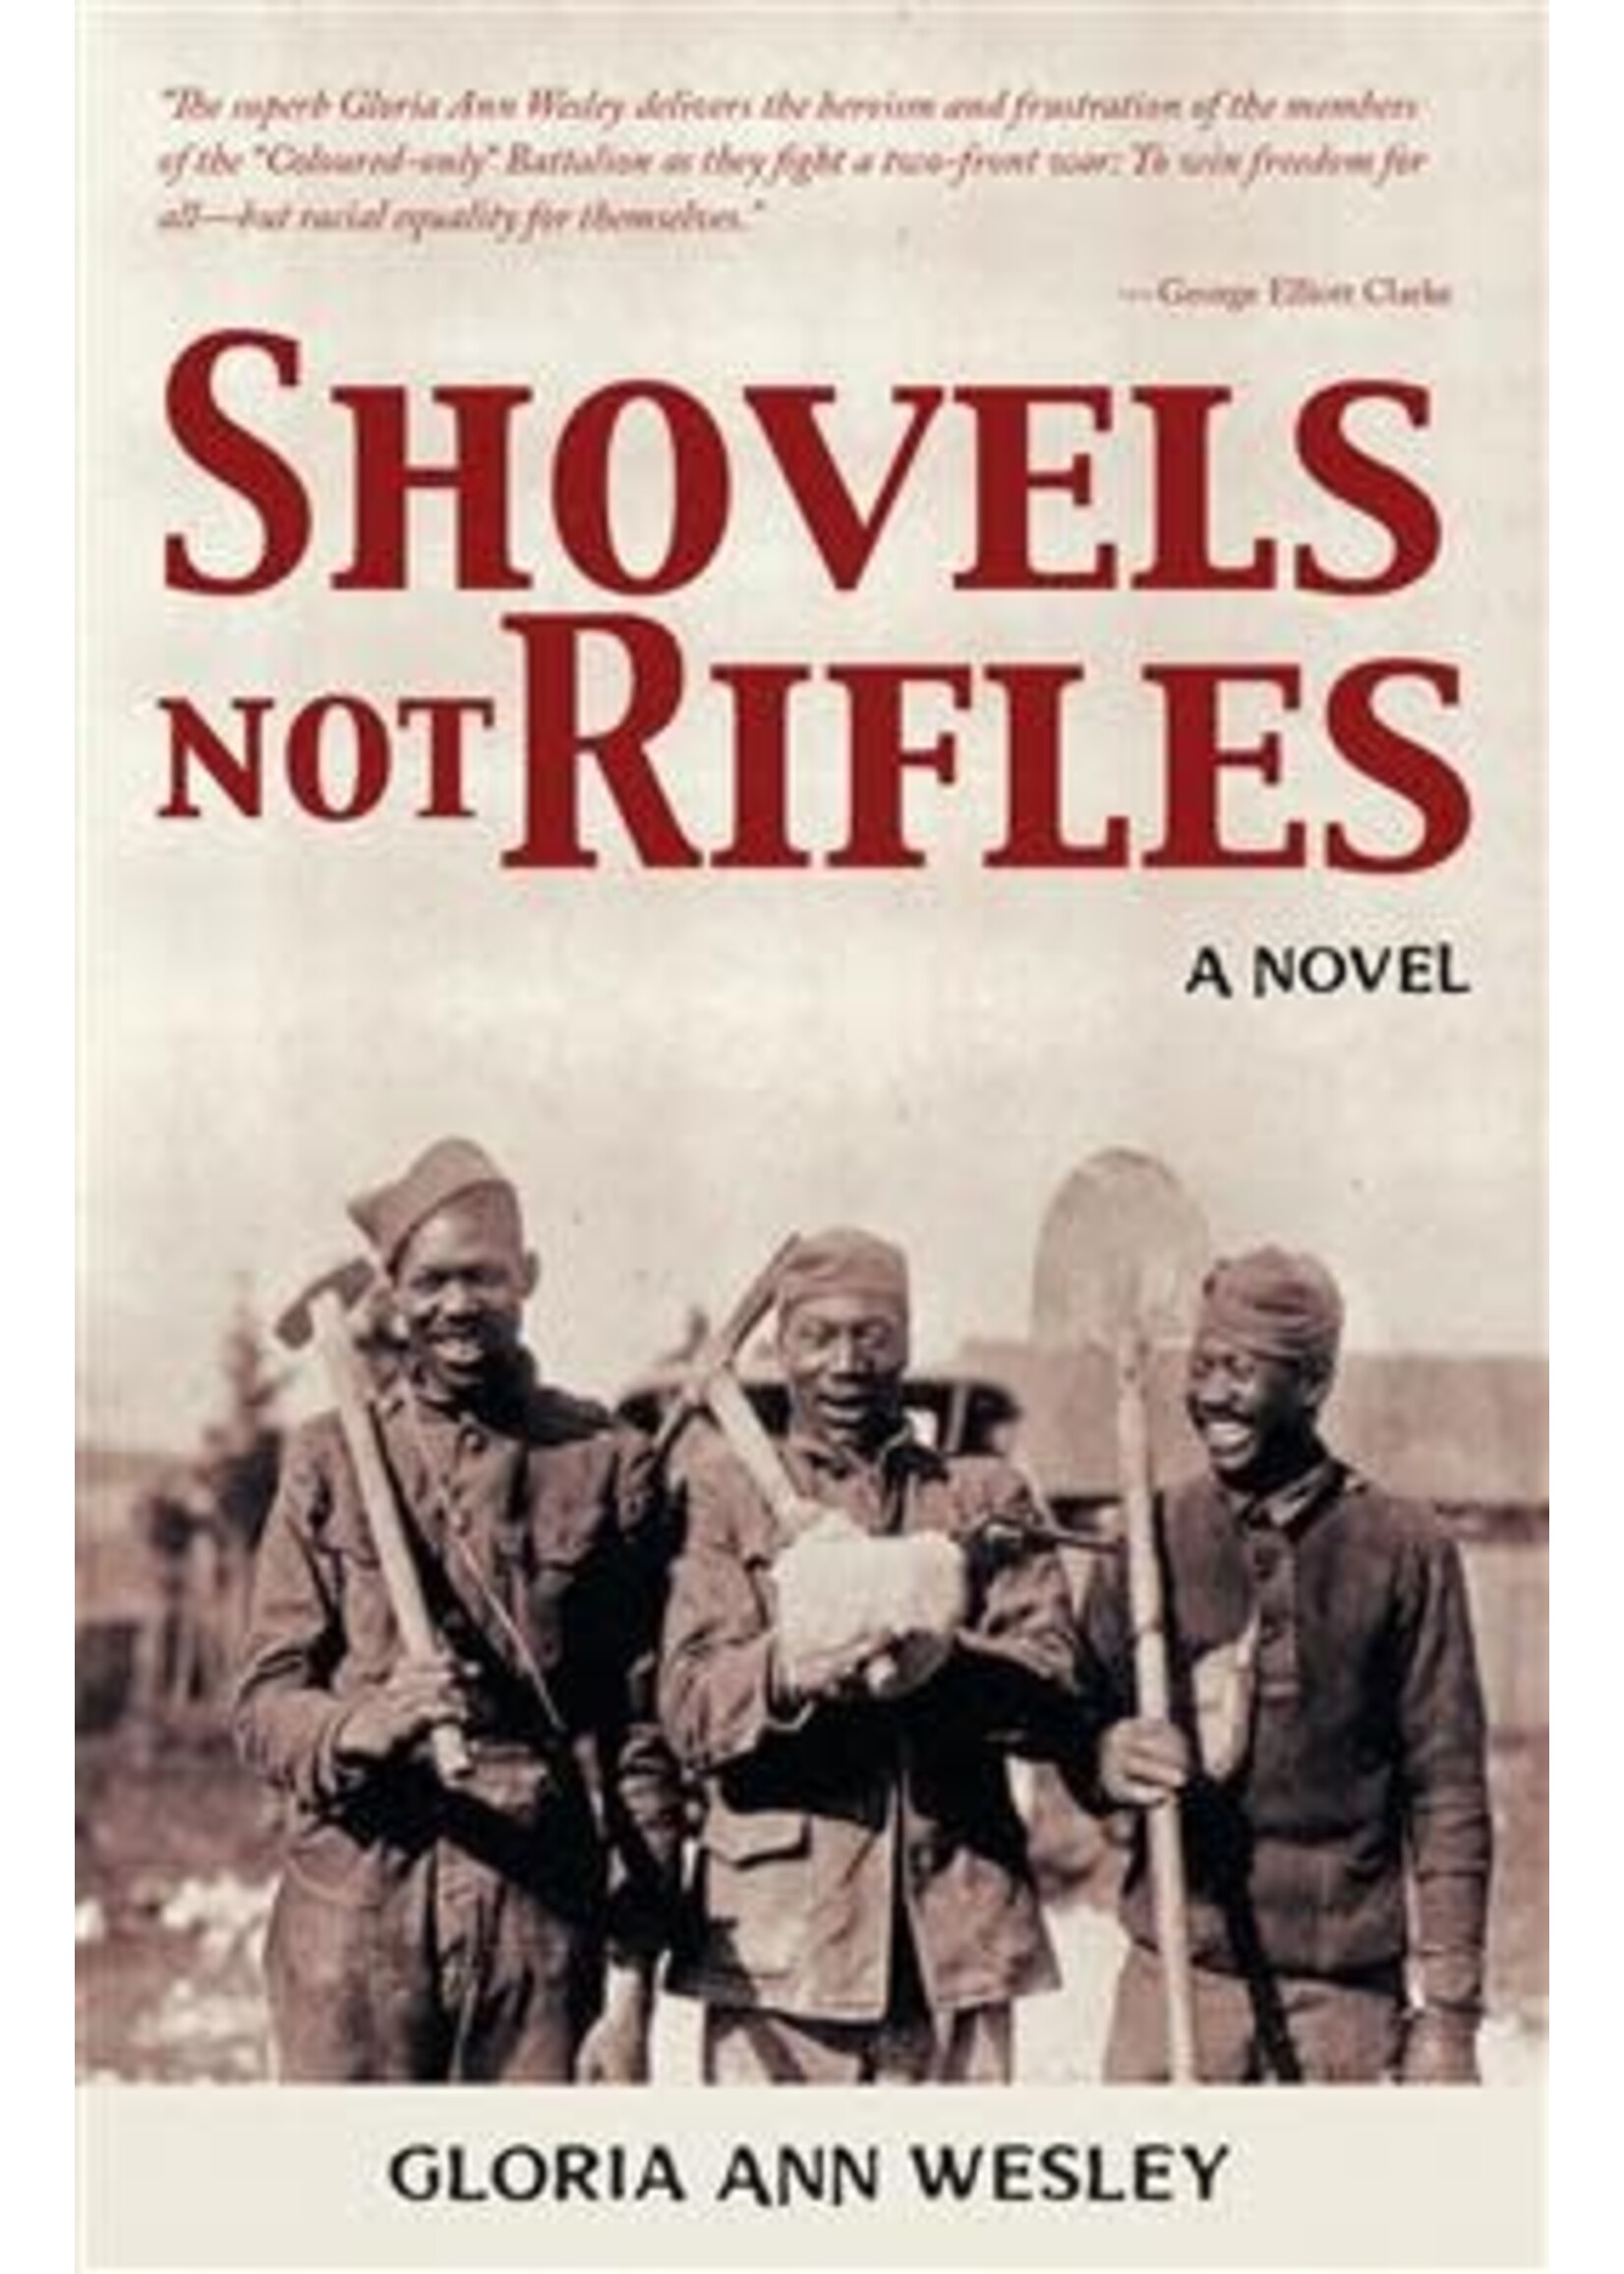 Shovels not Rifles by Gloria Ann Wesley